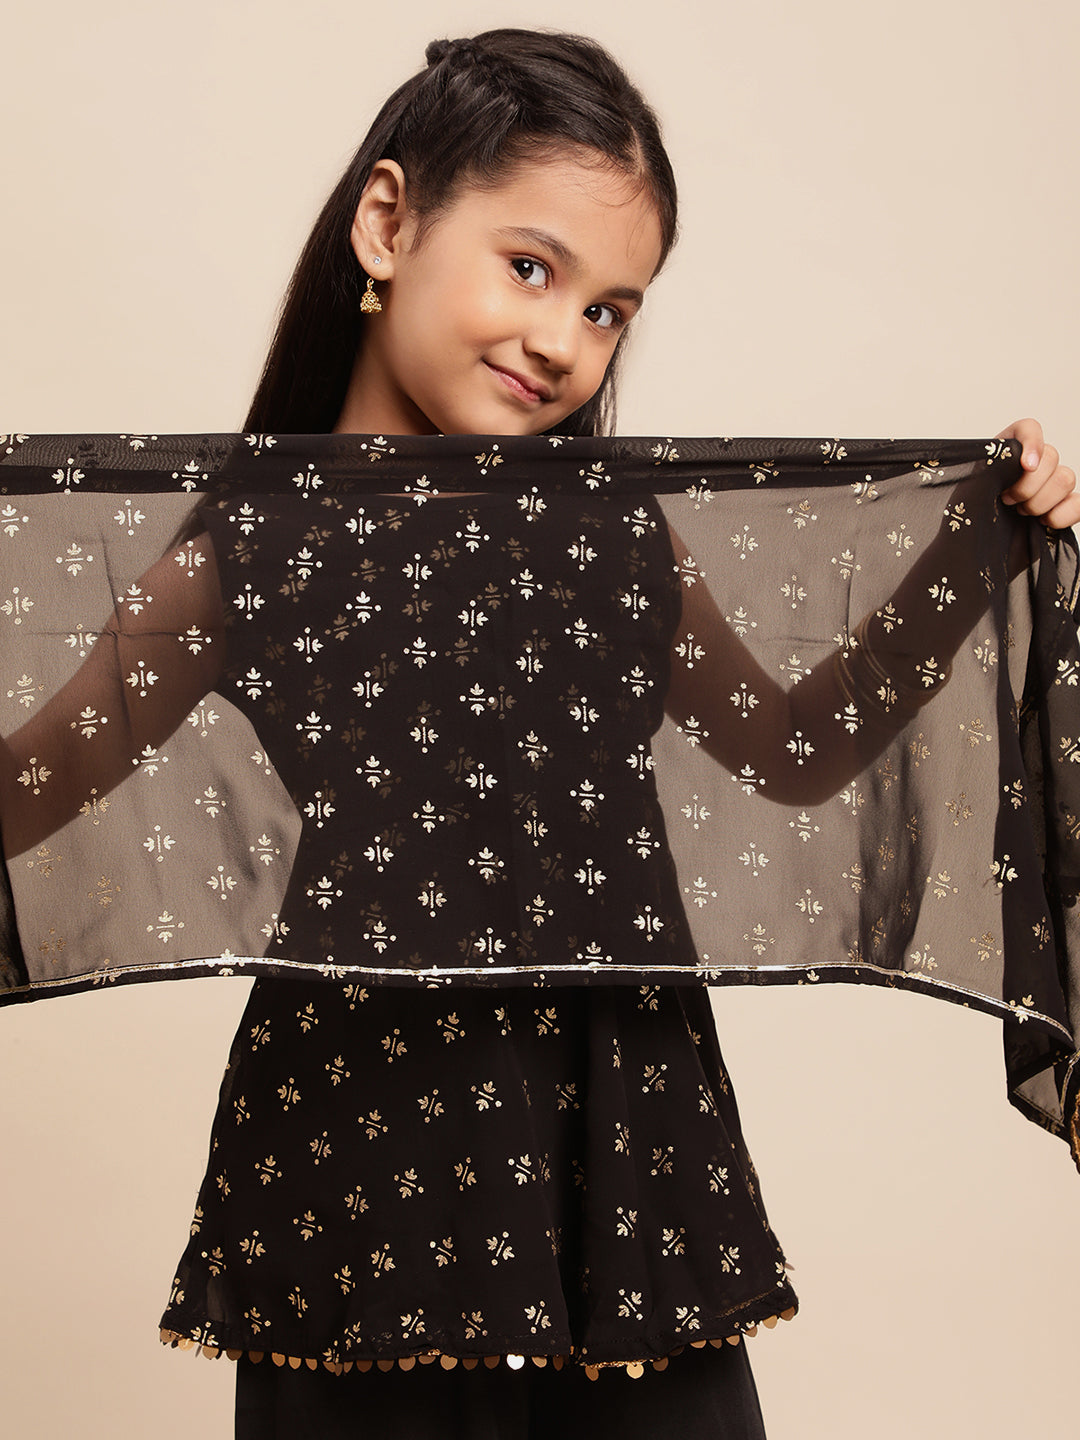 Ahalyaa Girls Black Georgette Gold Foil Print Kids Peplum style Kurta Sharara Set With Dupatta